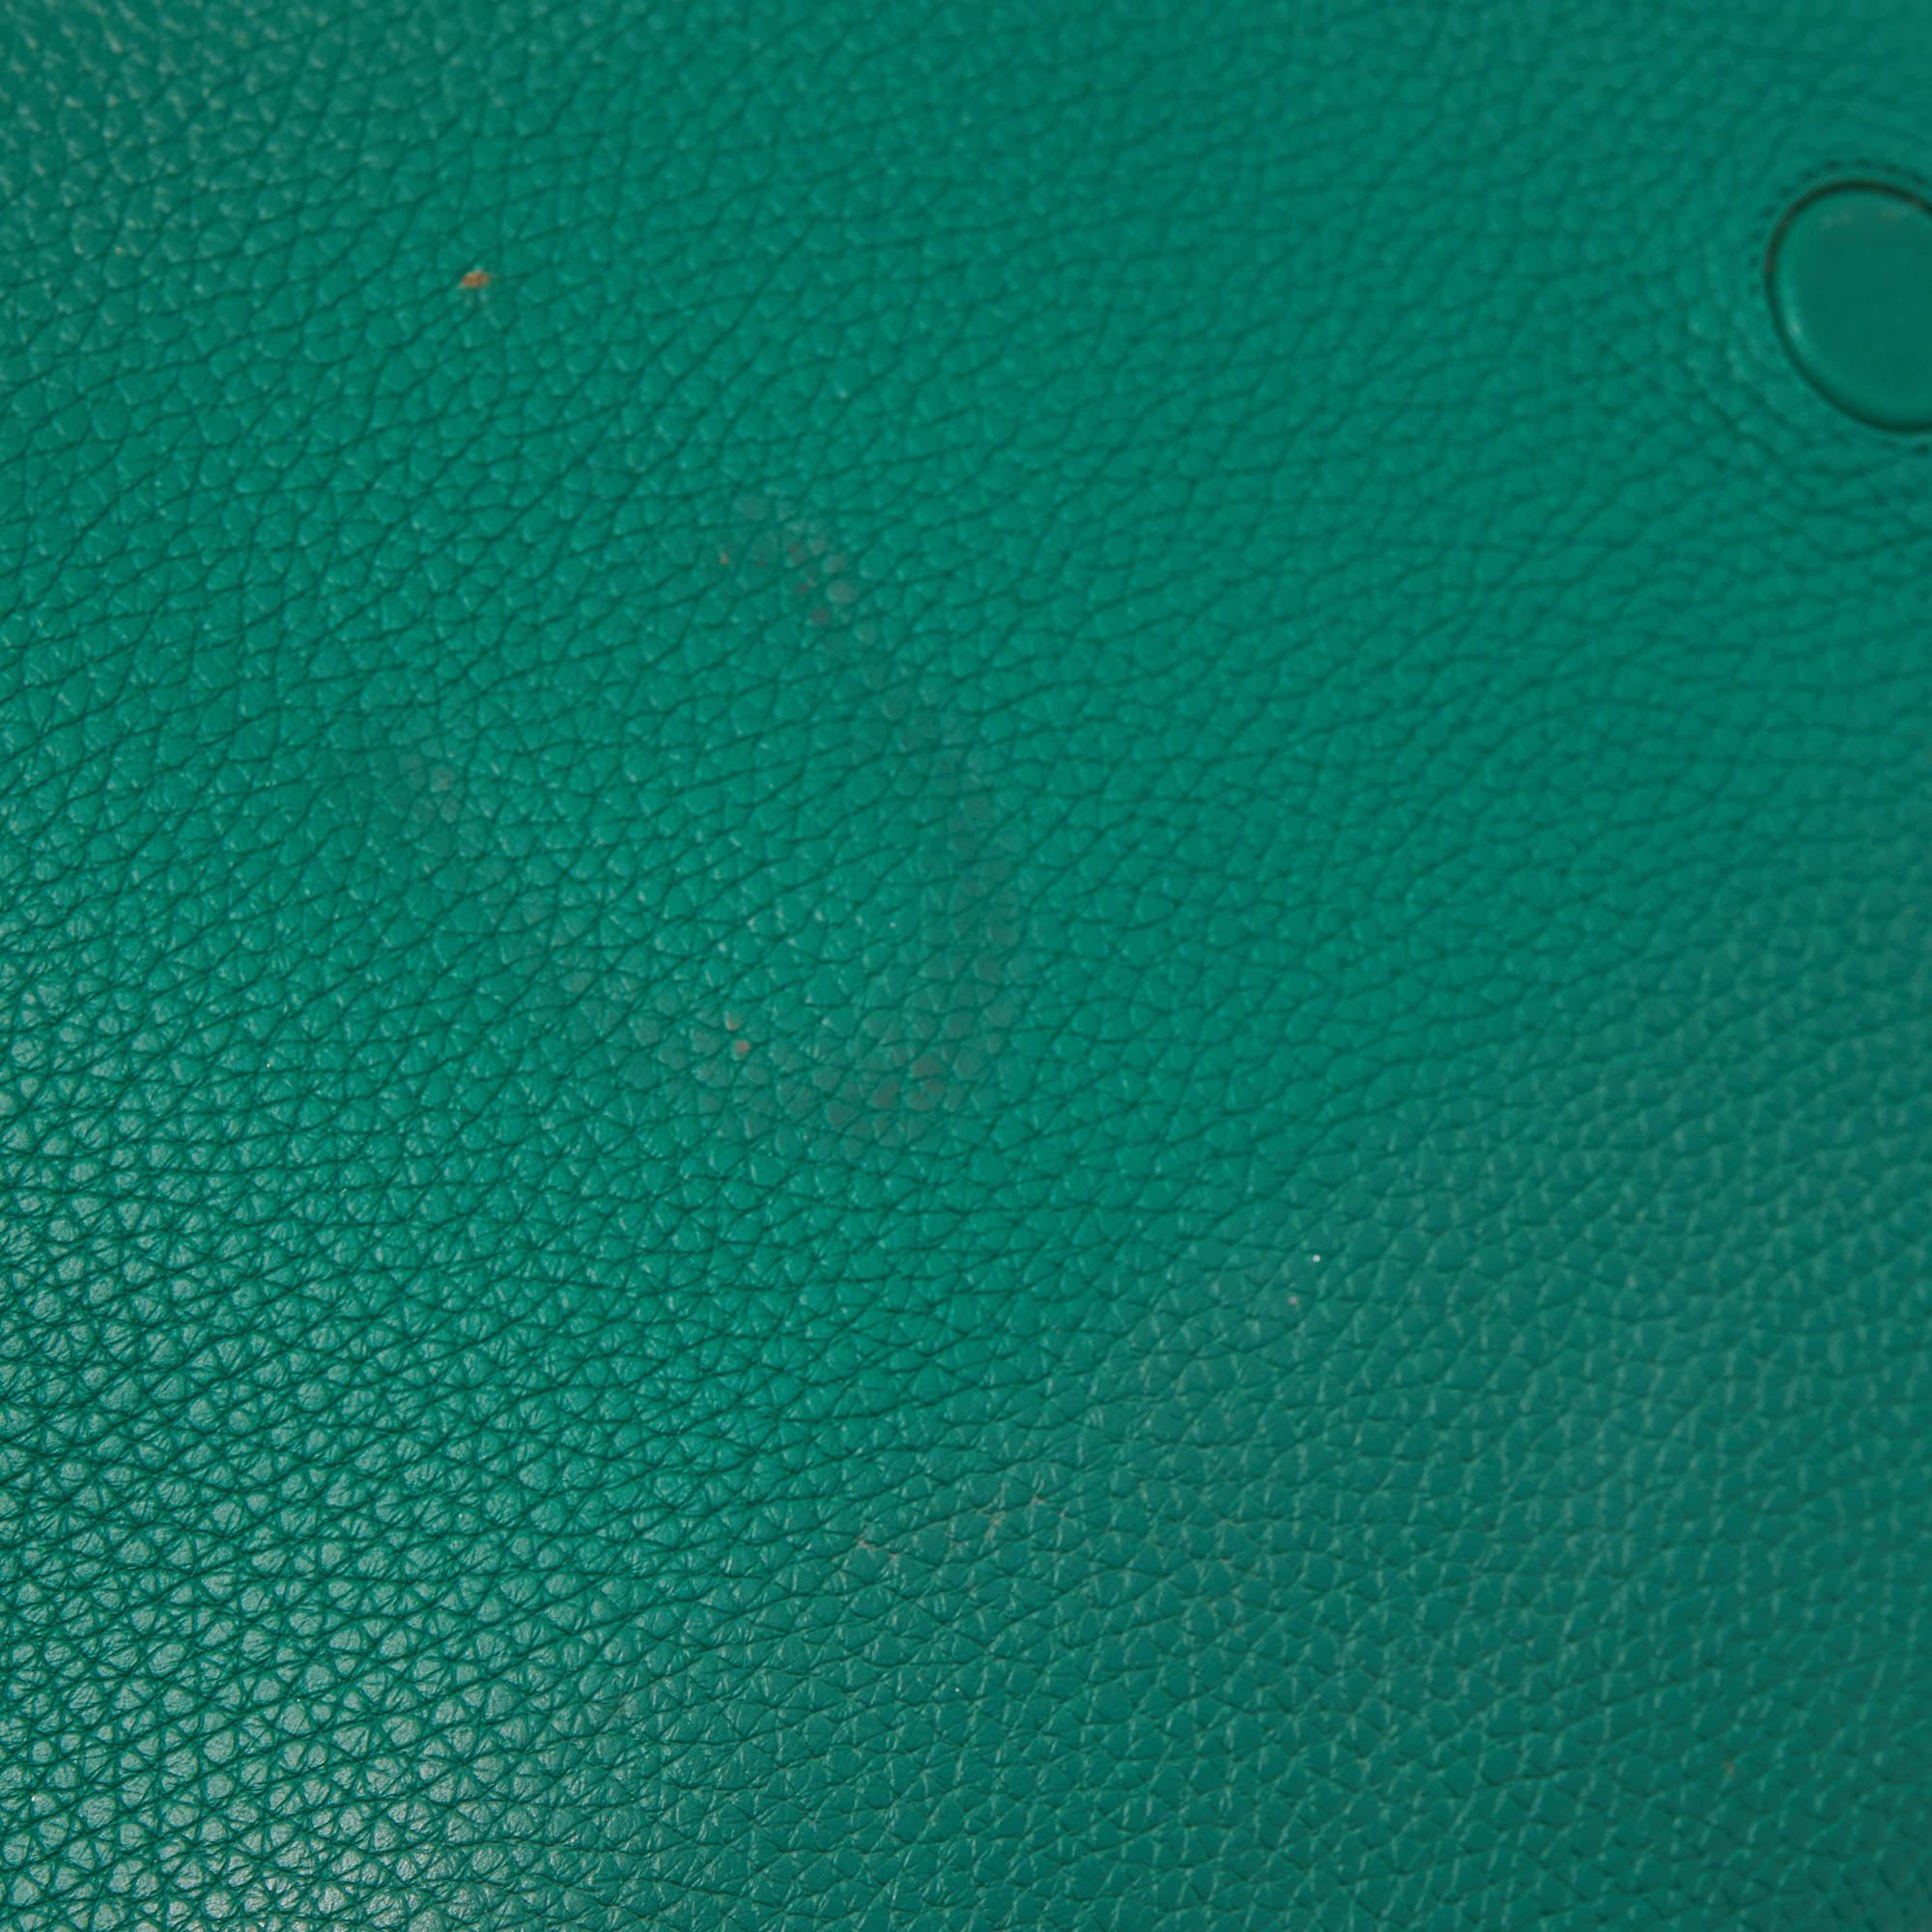 Dior Green Leather Medium Diorever Bag For Sale 14